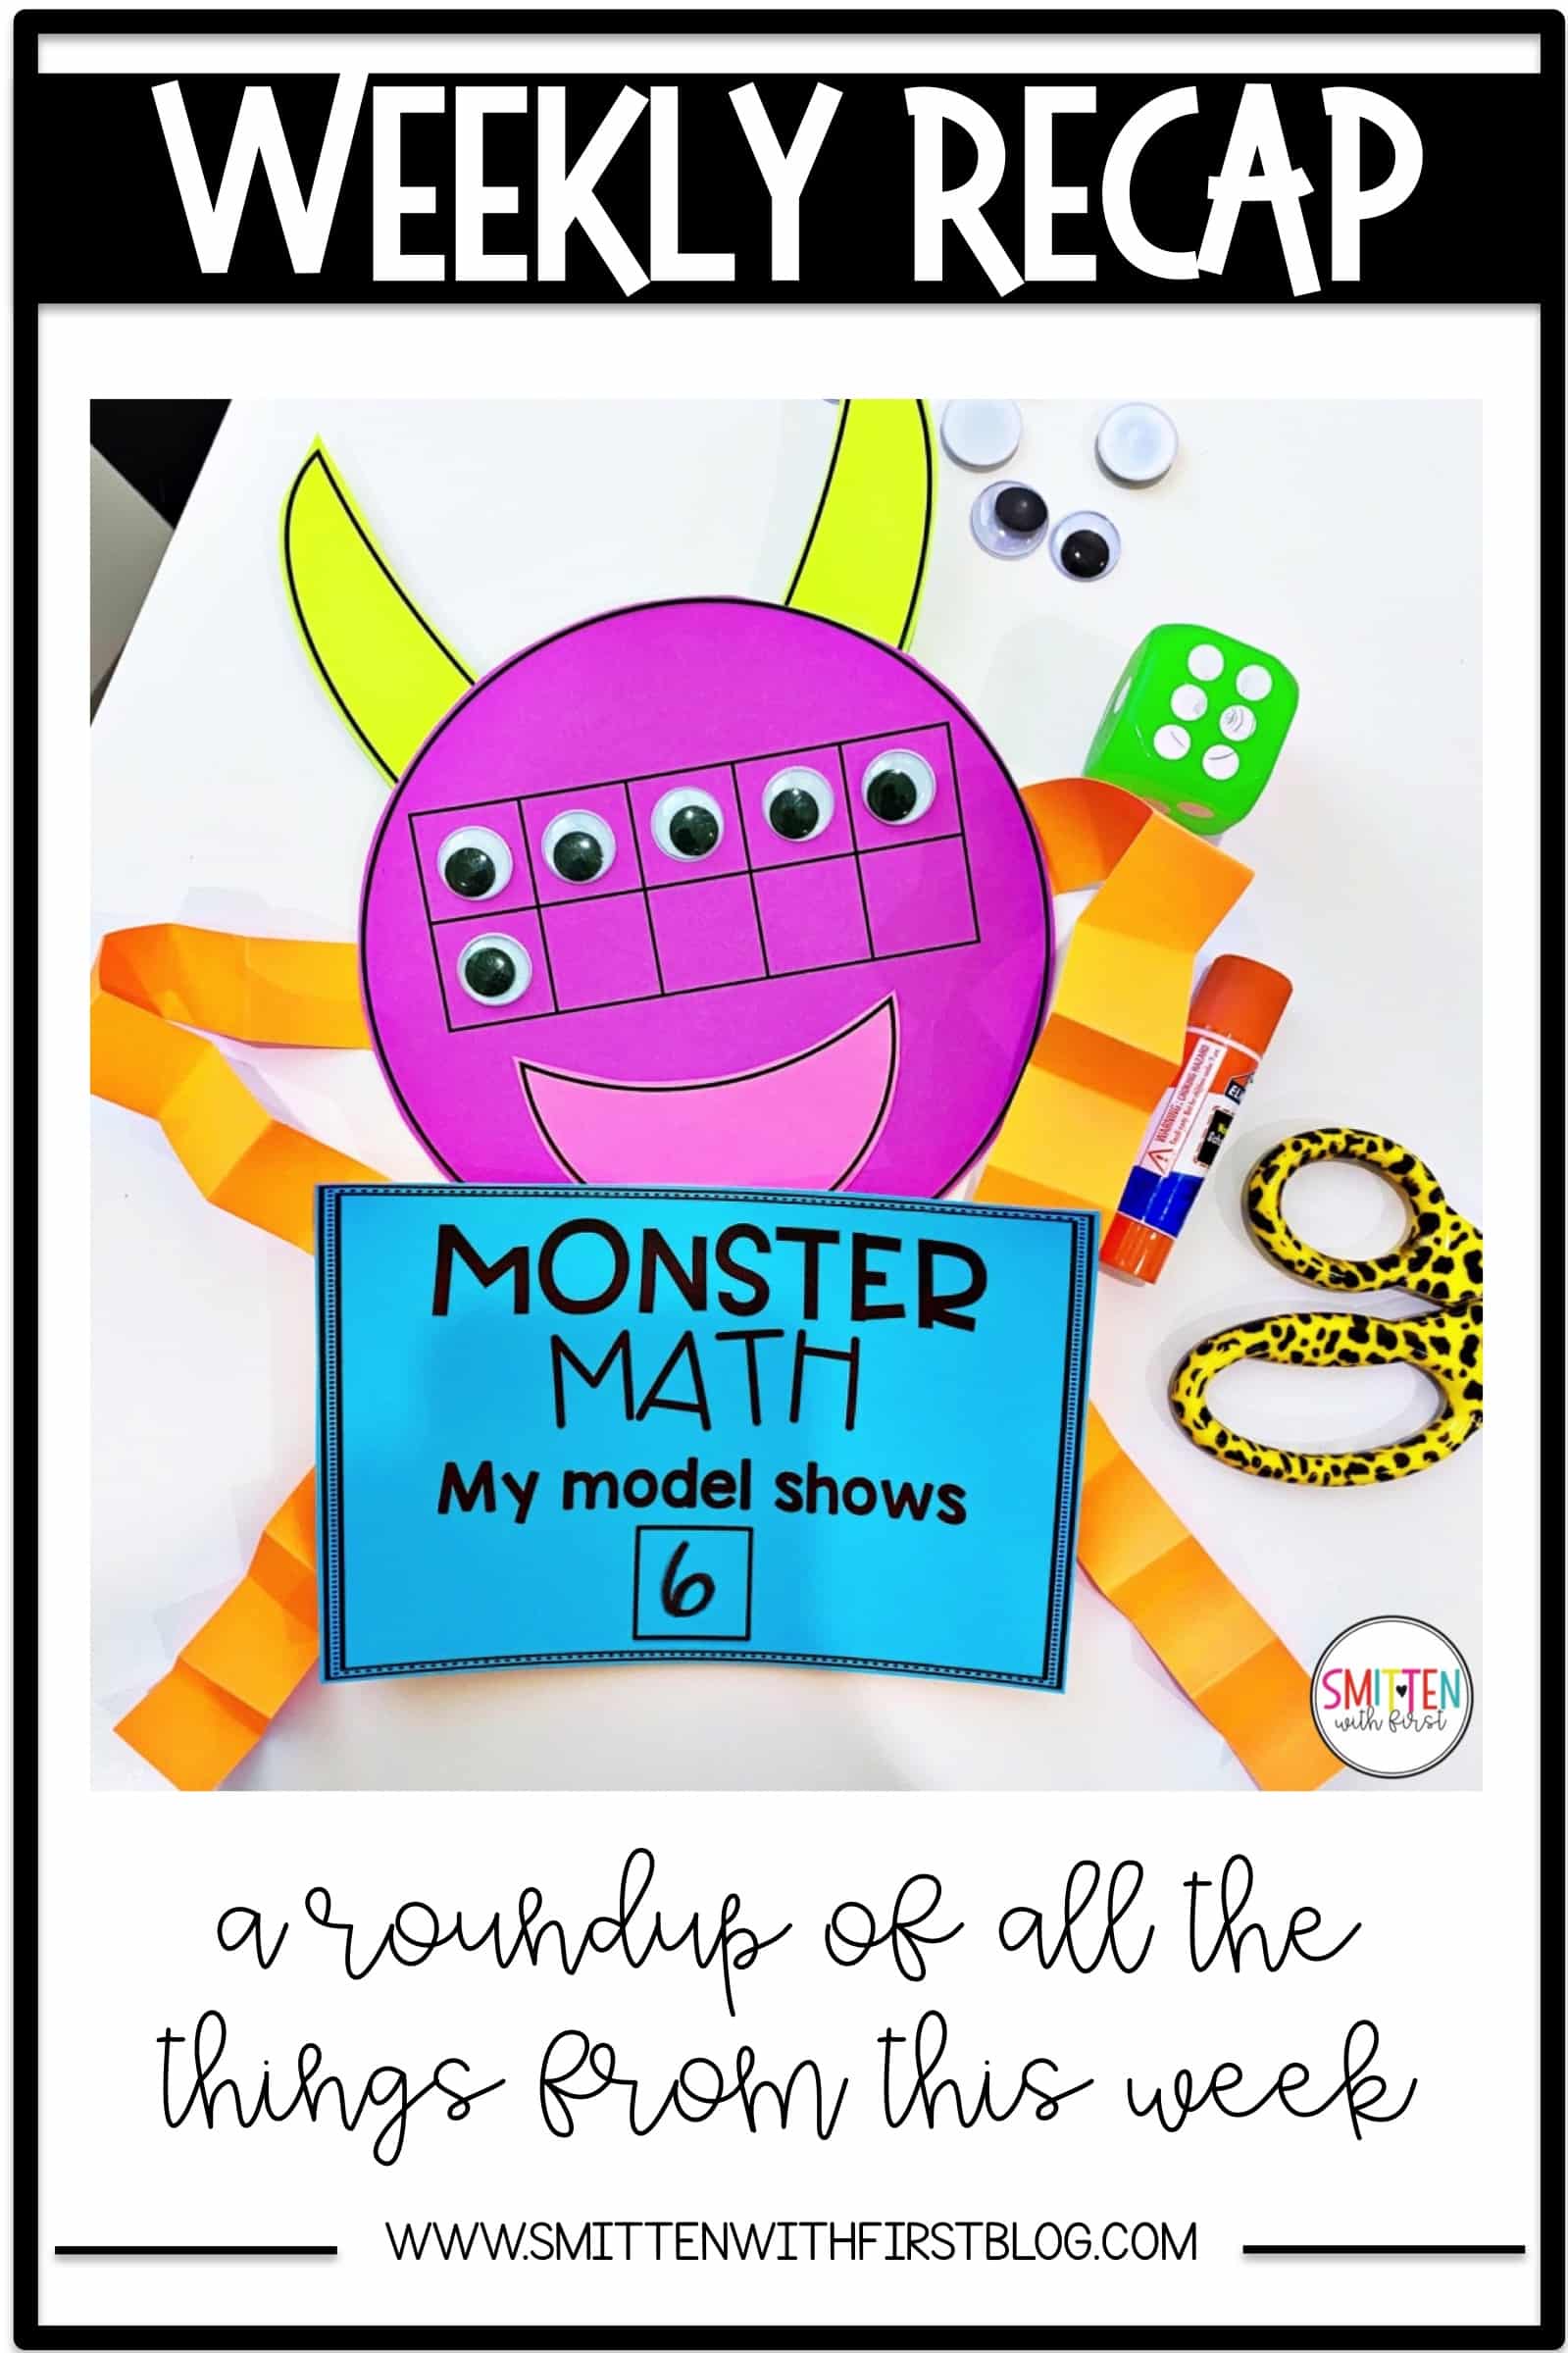 Monster Math, Digital Writing + Recap!